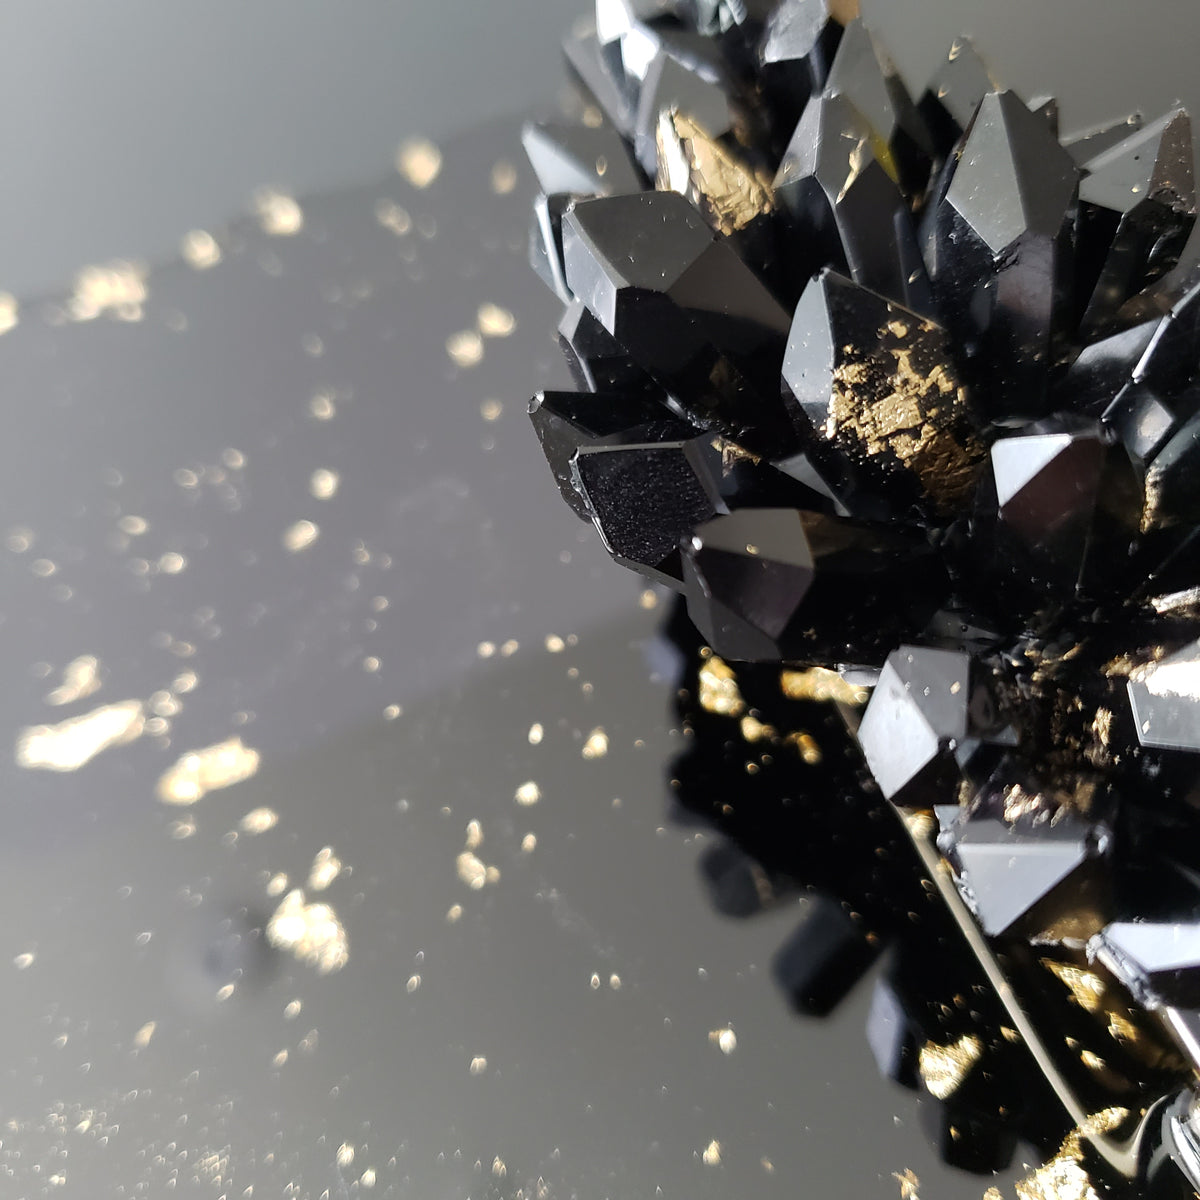 Black & Gold Flakes Resin Tray (Small) - Large Gemstones Handles